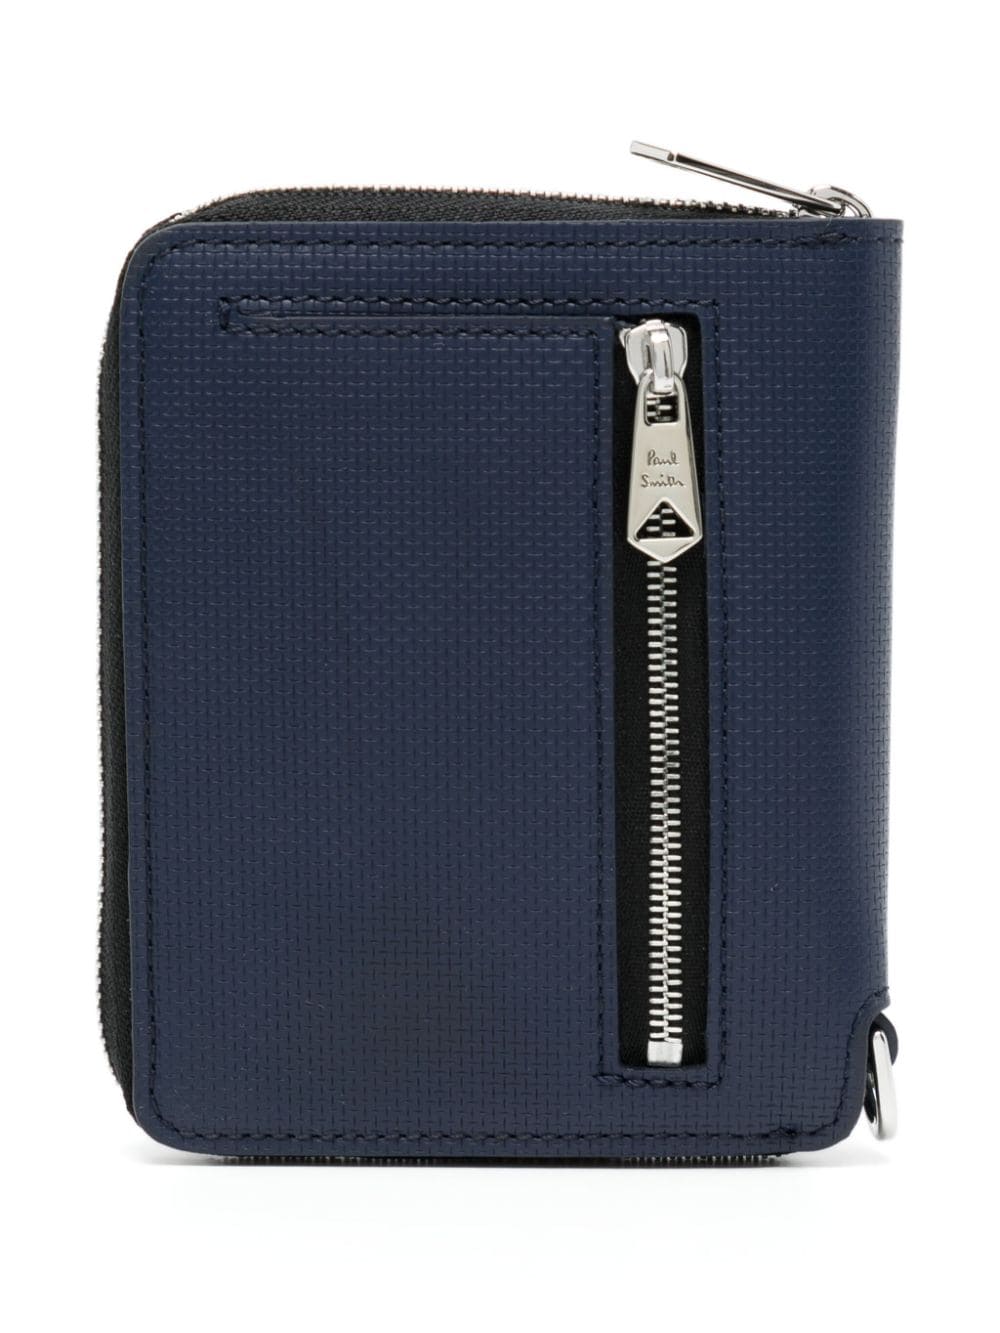 Paul Smith leather zip-around wallet - Blauw